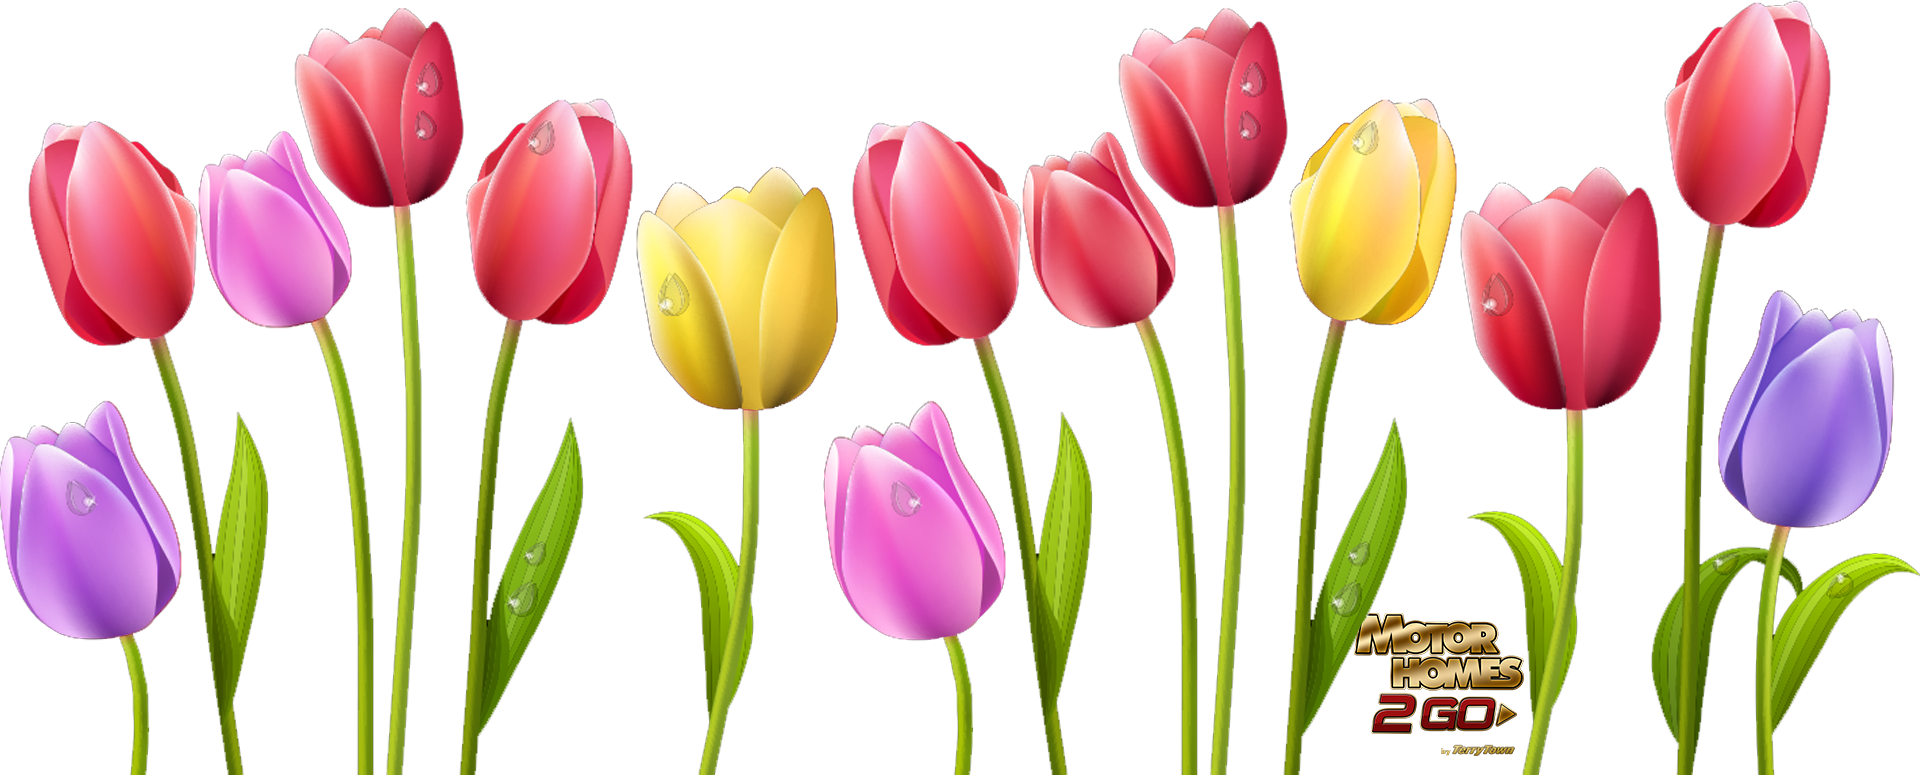 Clipart free tulip. Jokingart com flower 